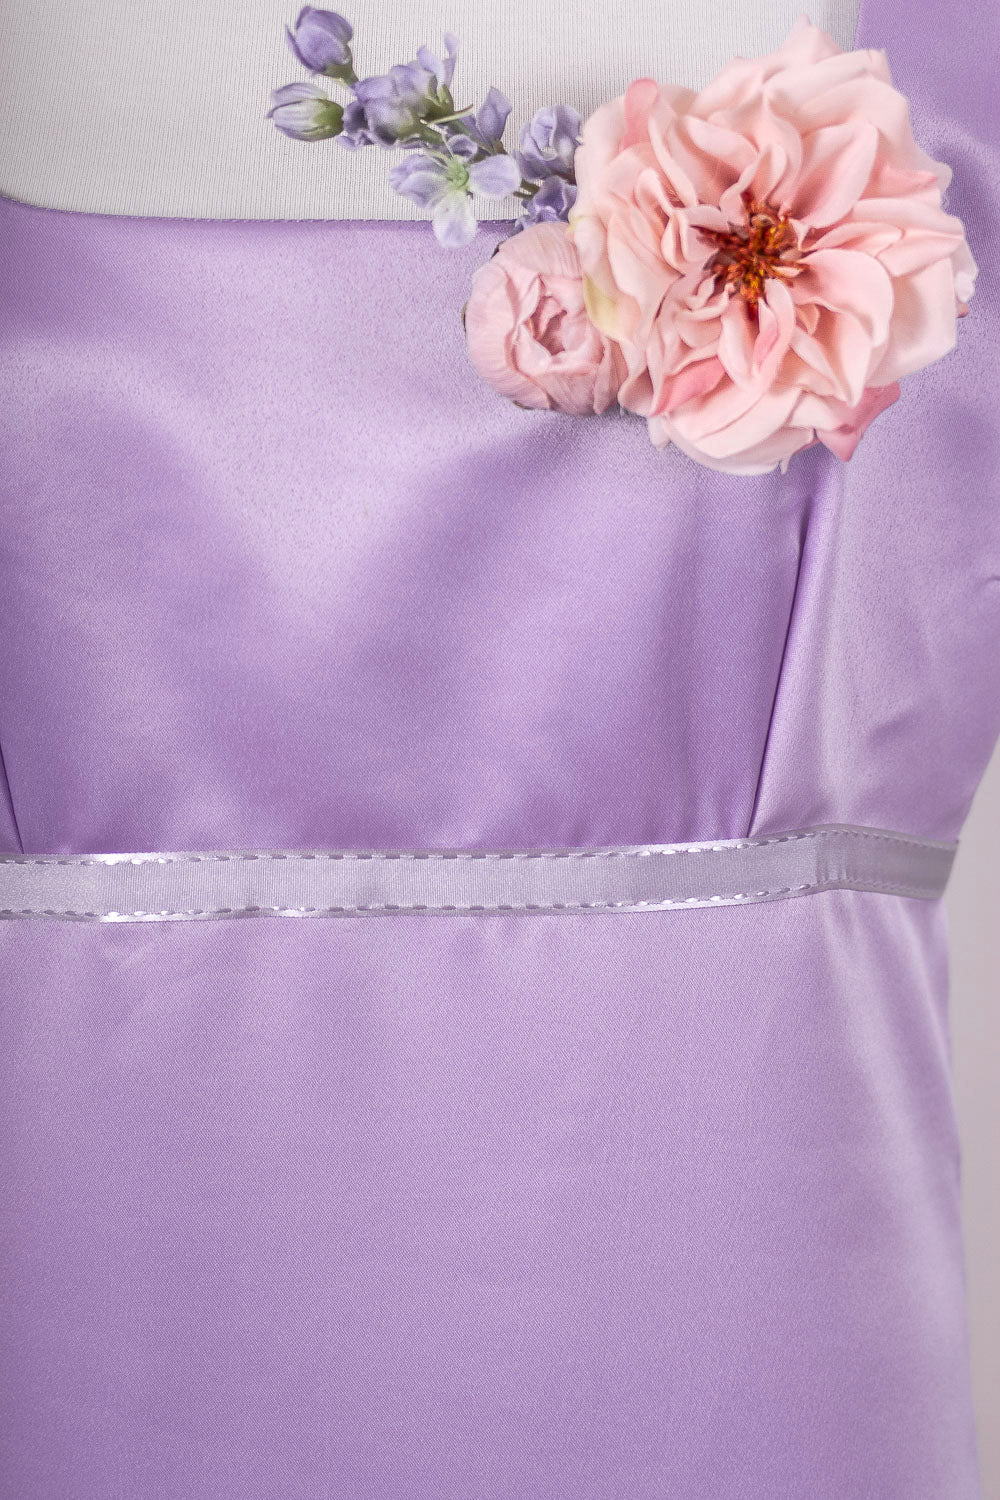 Regency era gown - close up